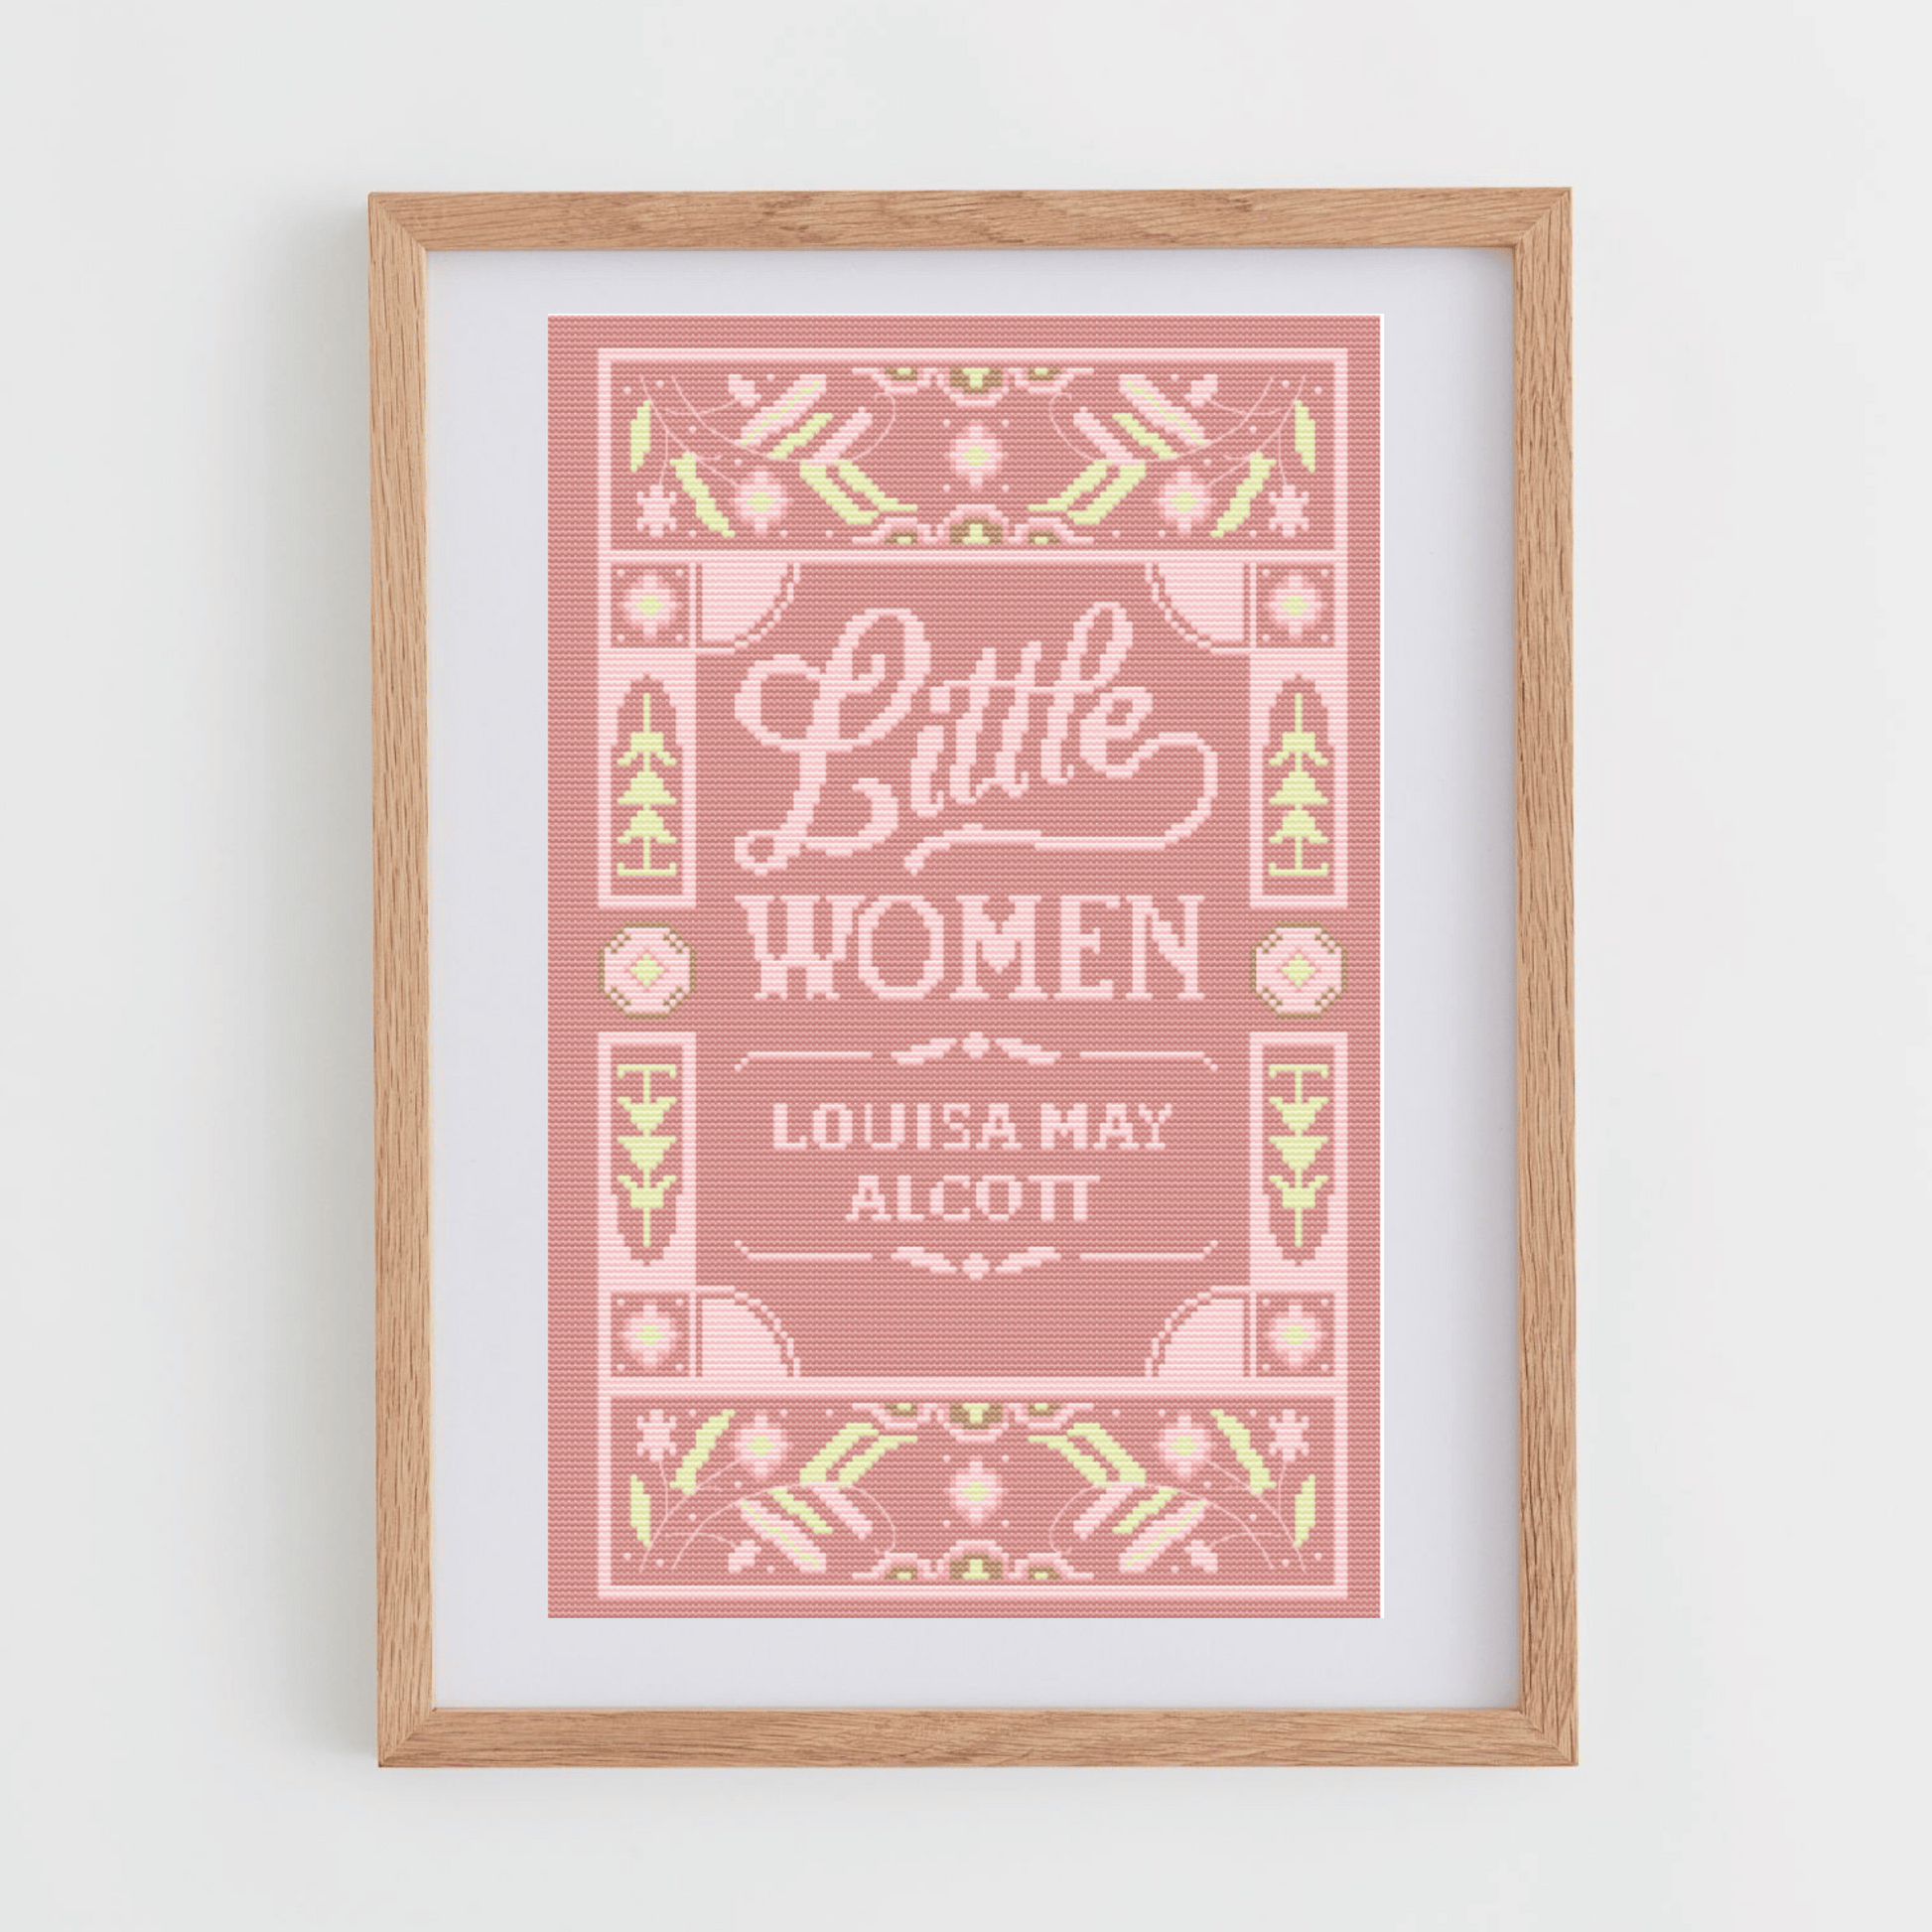 Little Women cross-stitch chart | Book Cover Cross Stitch Chart